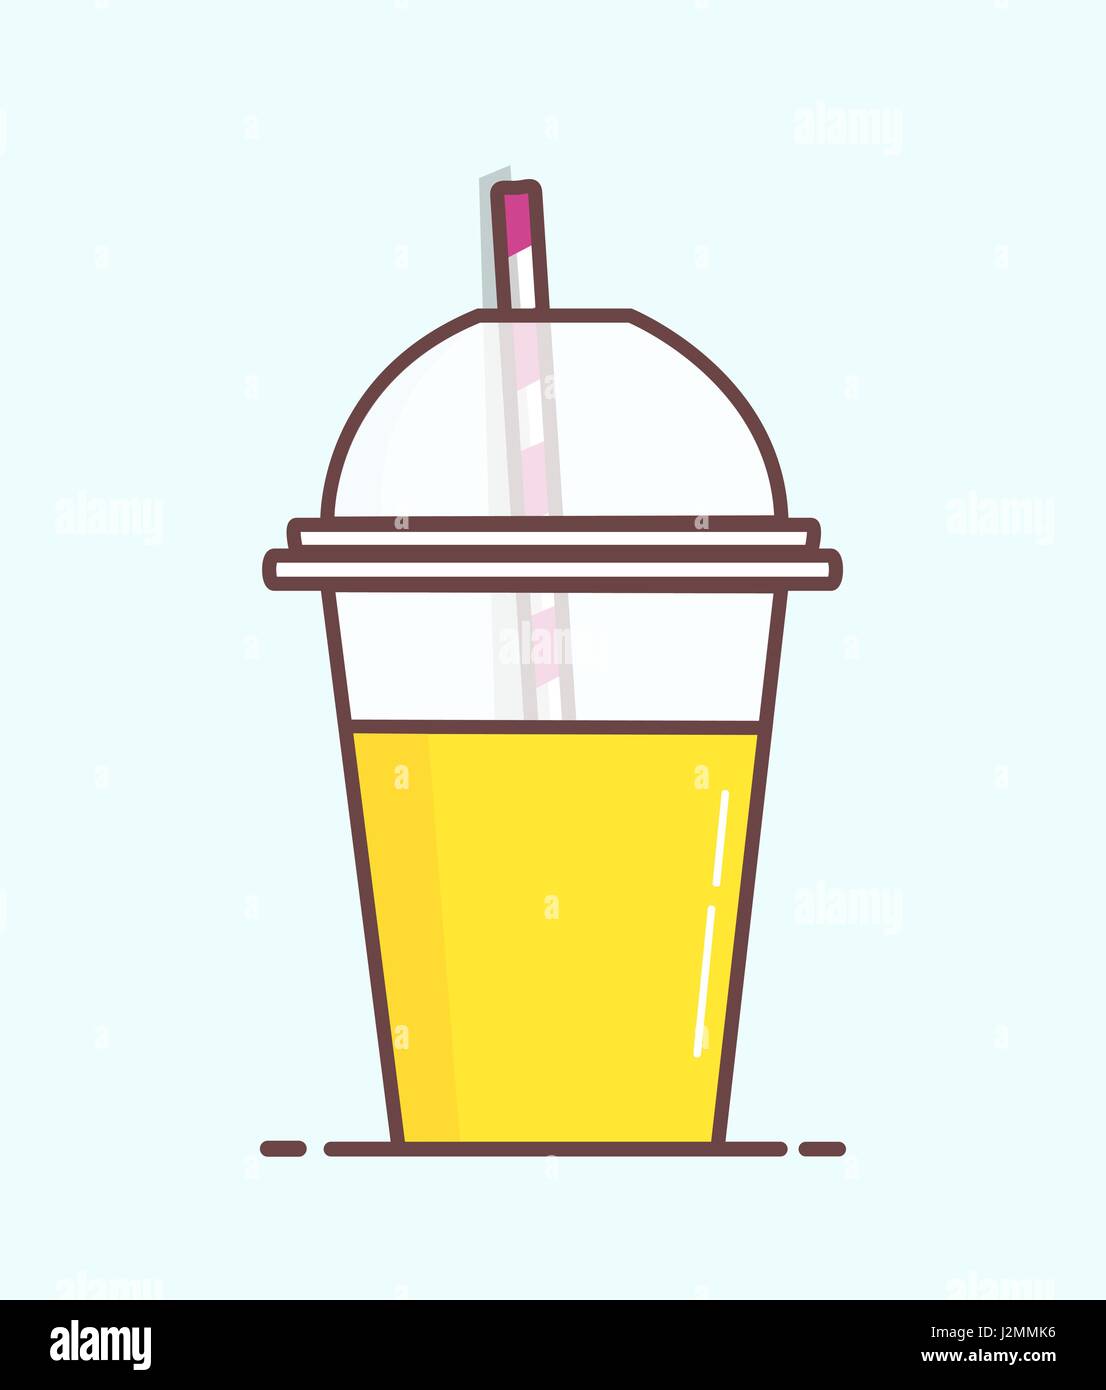 https://c8.alamy.com/comp/J2MMK6/animated-cartoon-plastic-orange-juice-cup-with-straw-in-minimalist-J2MMK6.jpg